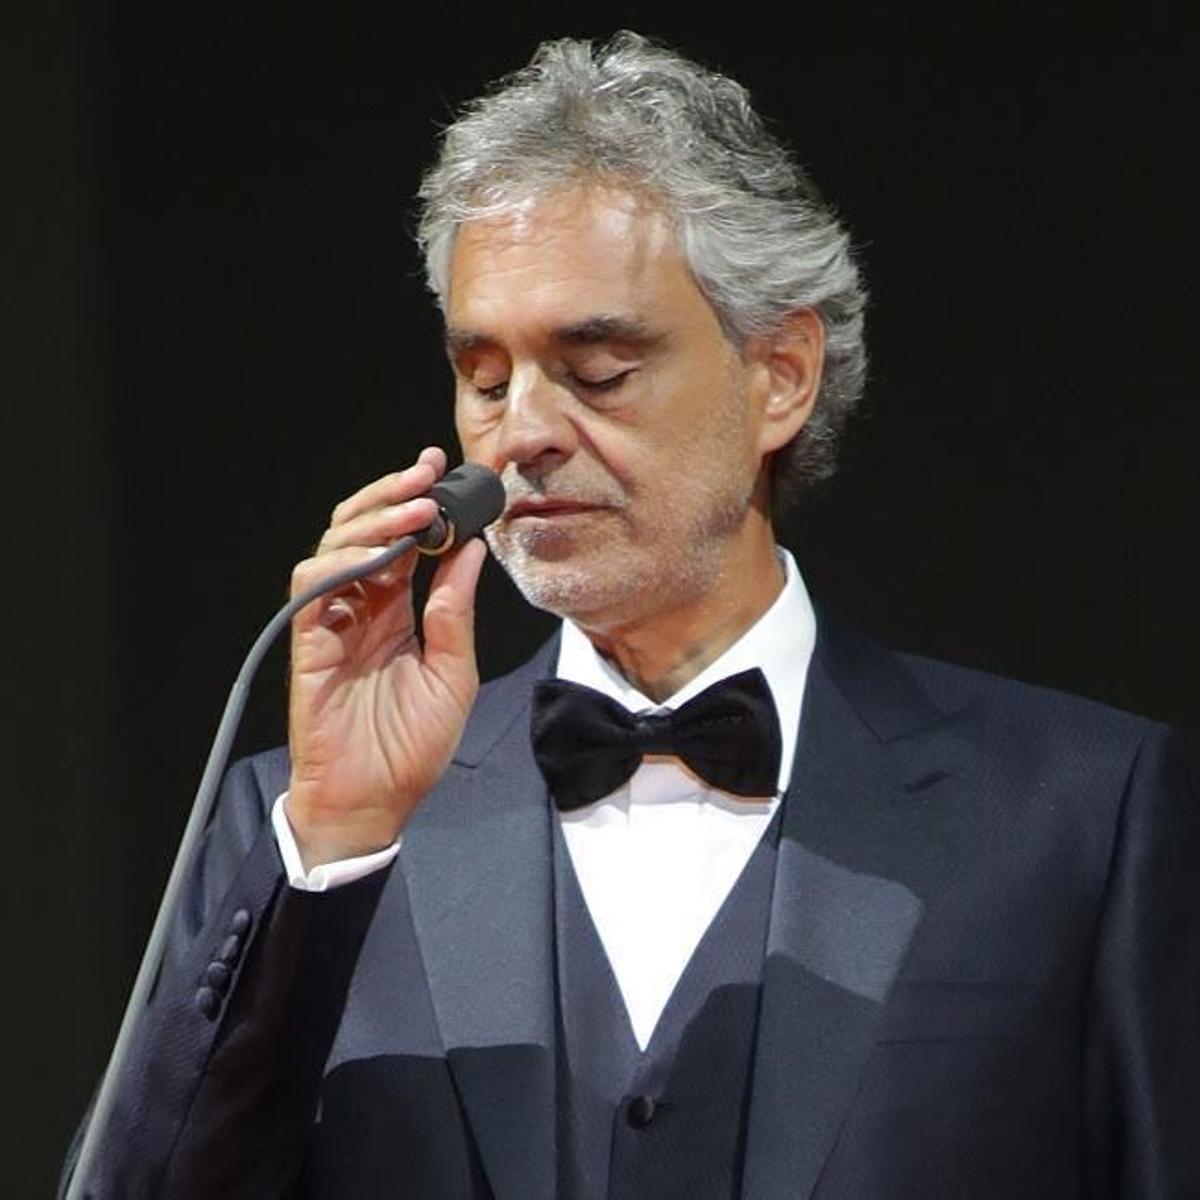 Ogorčeni Andrea Bocelli: Tretirali su me kao kriminalca iako nisam počinio zločin